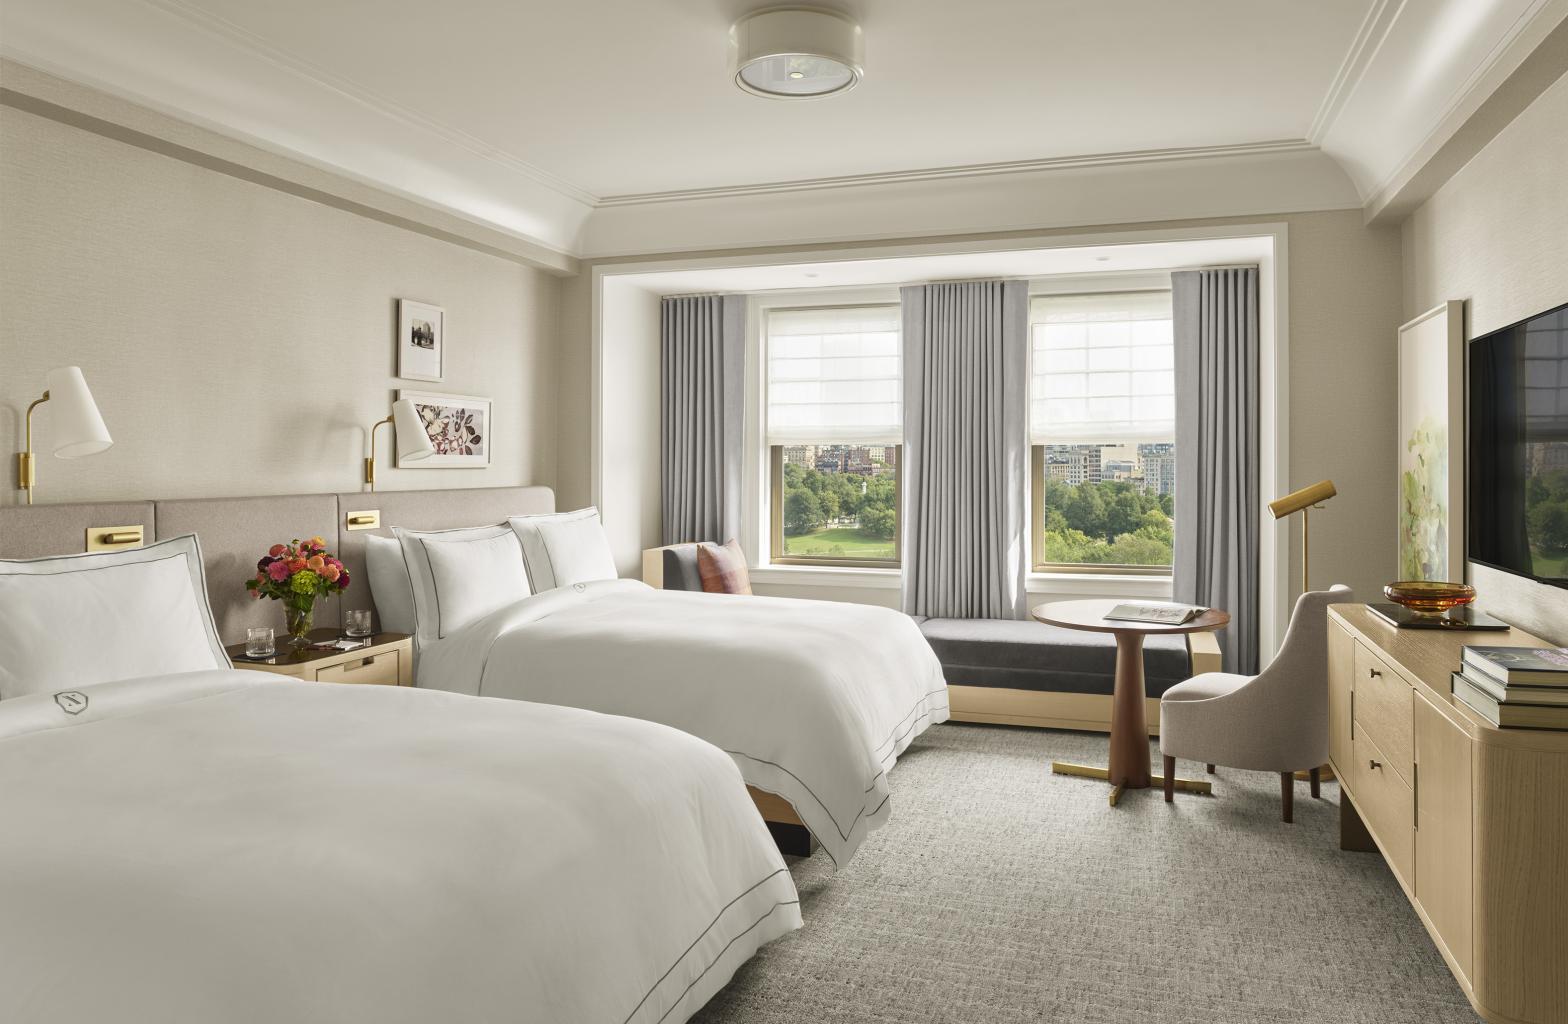 interior shot of bedroom with two queen beds and windows overlooking park